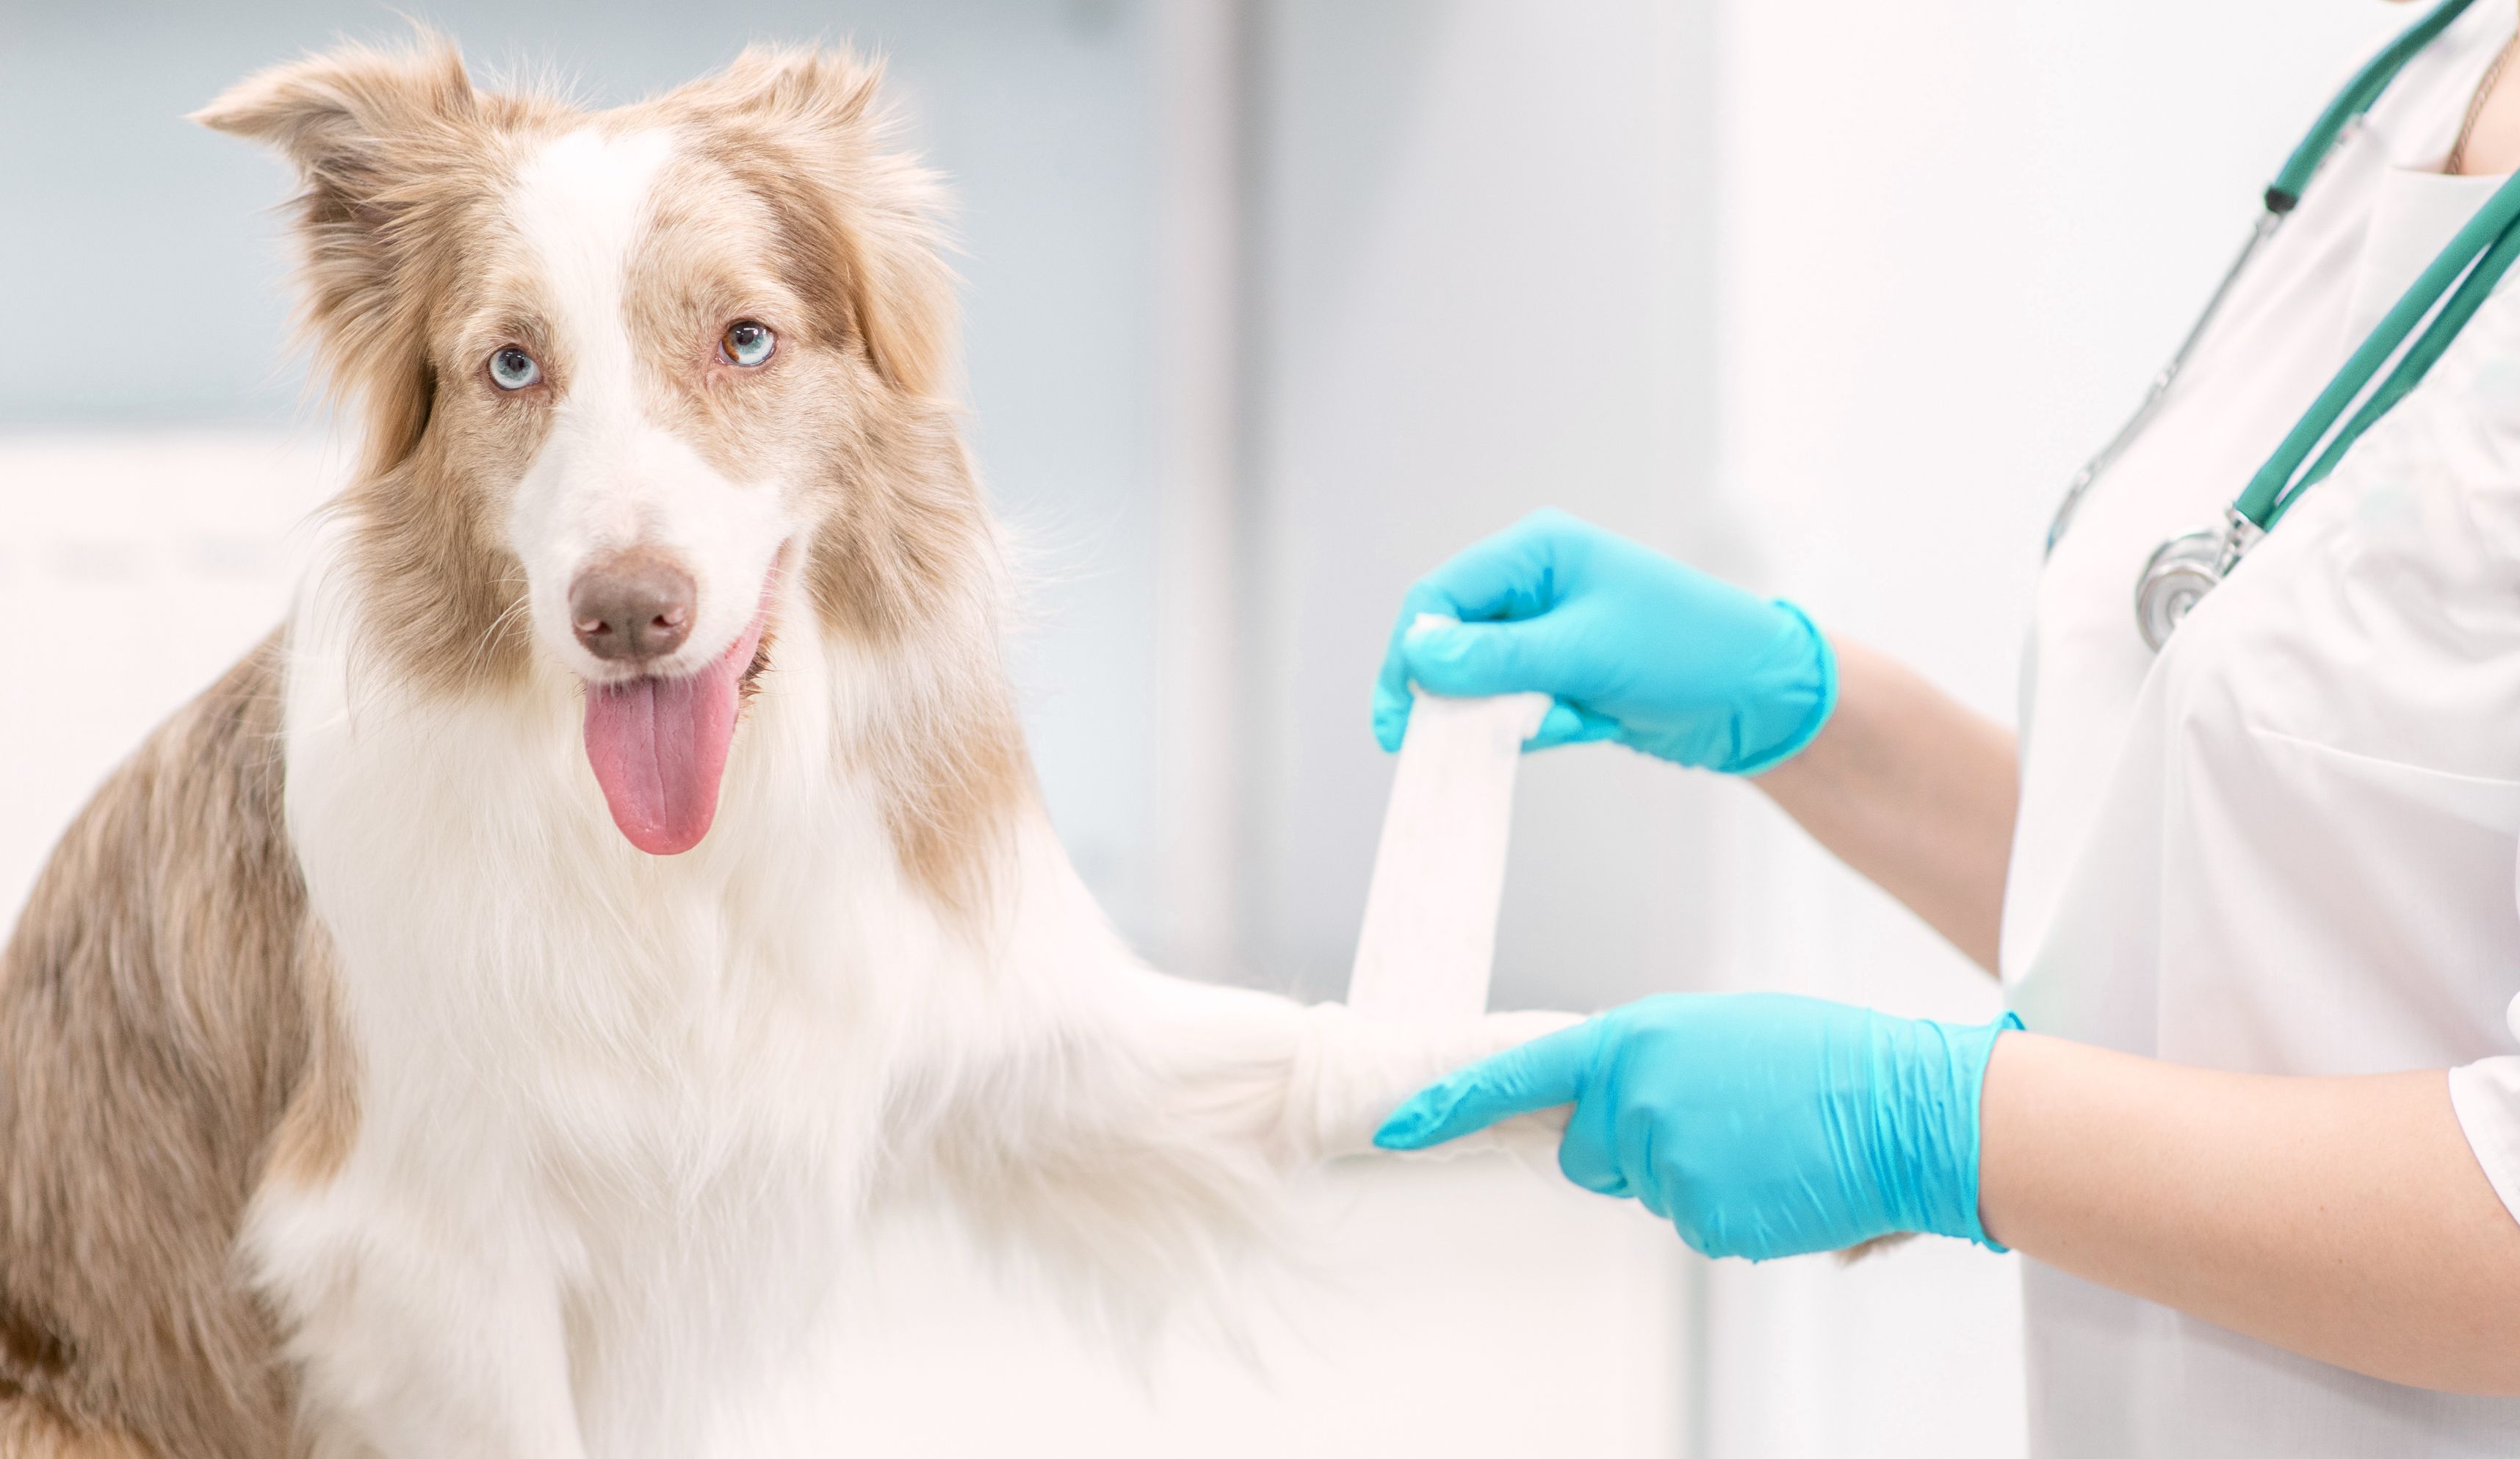 A vet doctor is applying bandage on a dog's leg.